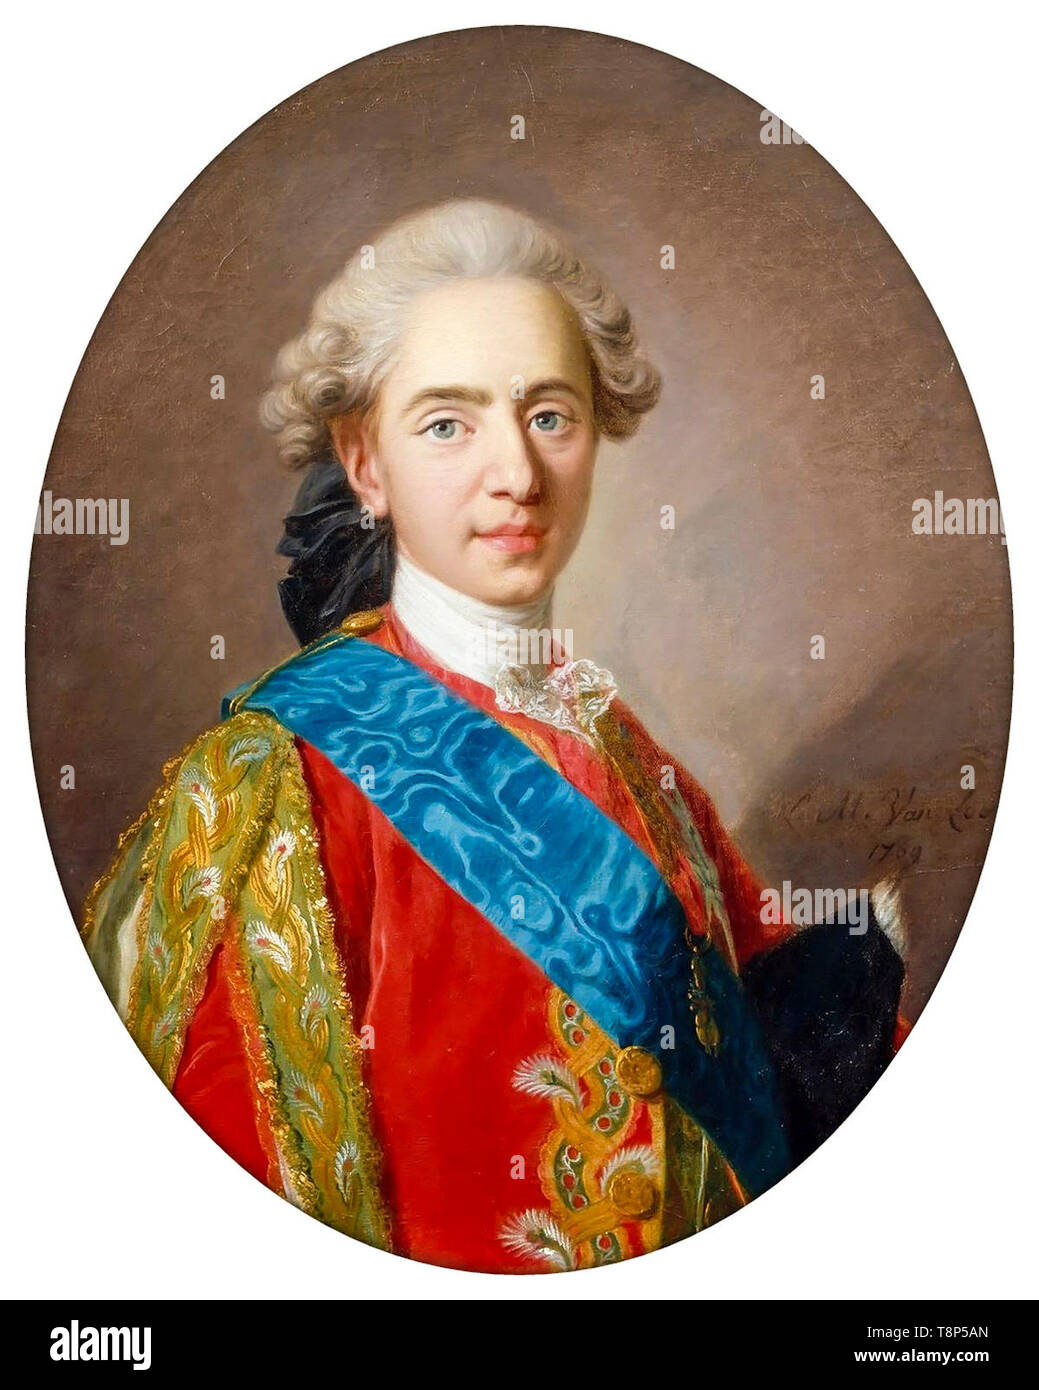 Louis-Michel van Loo, Louis XVI when he was the Dauphin of France, portrait painting, 1769 Stock Photo